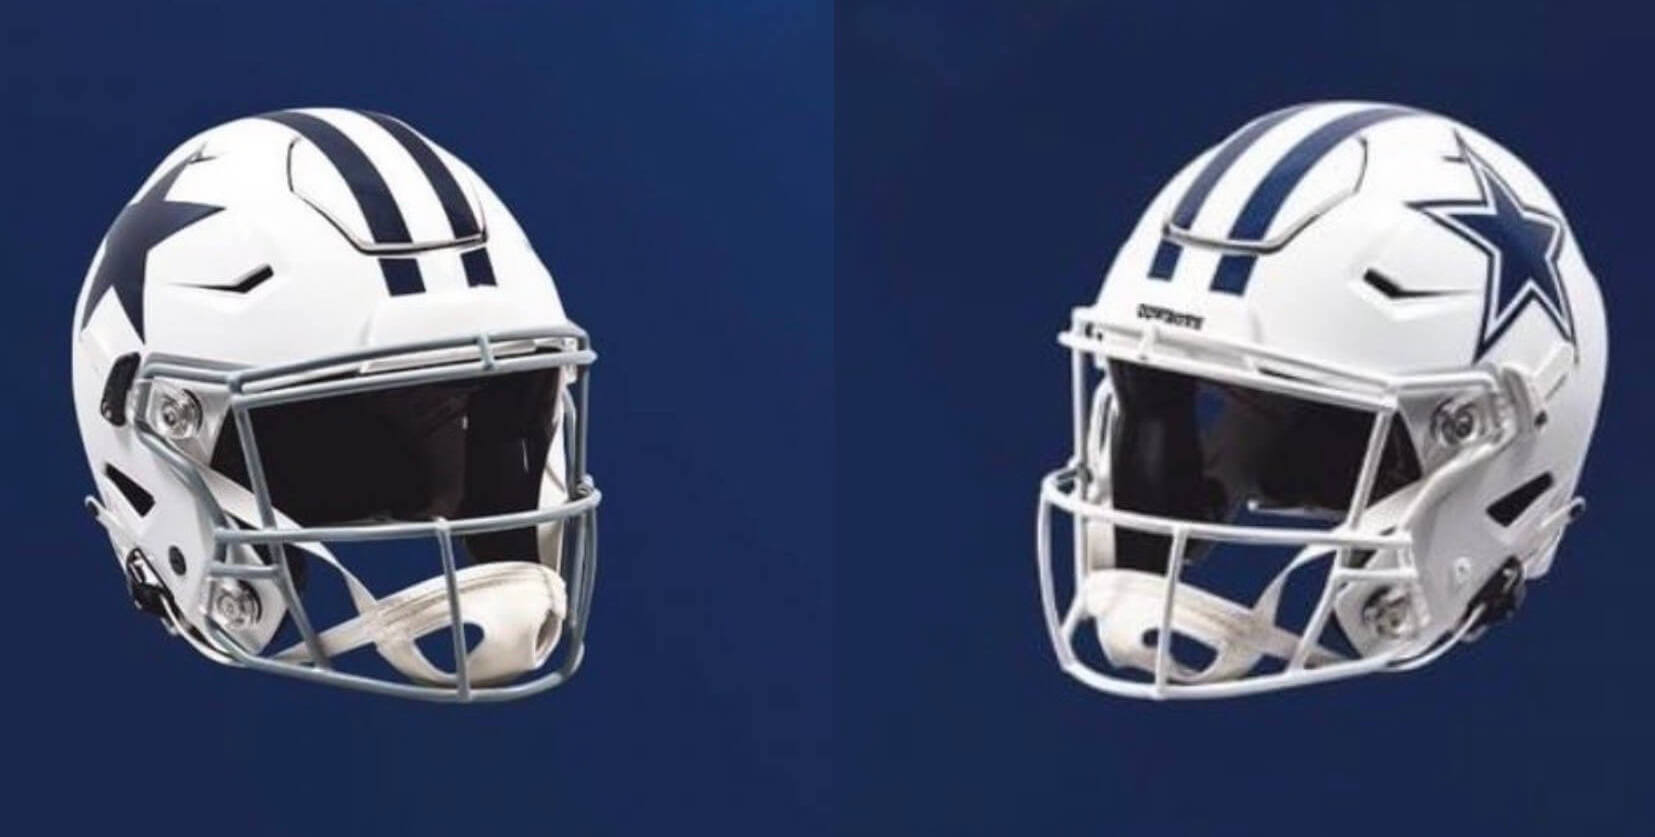 Dallas Cowboys bringing back throwback uniforms and white helmets